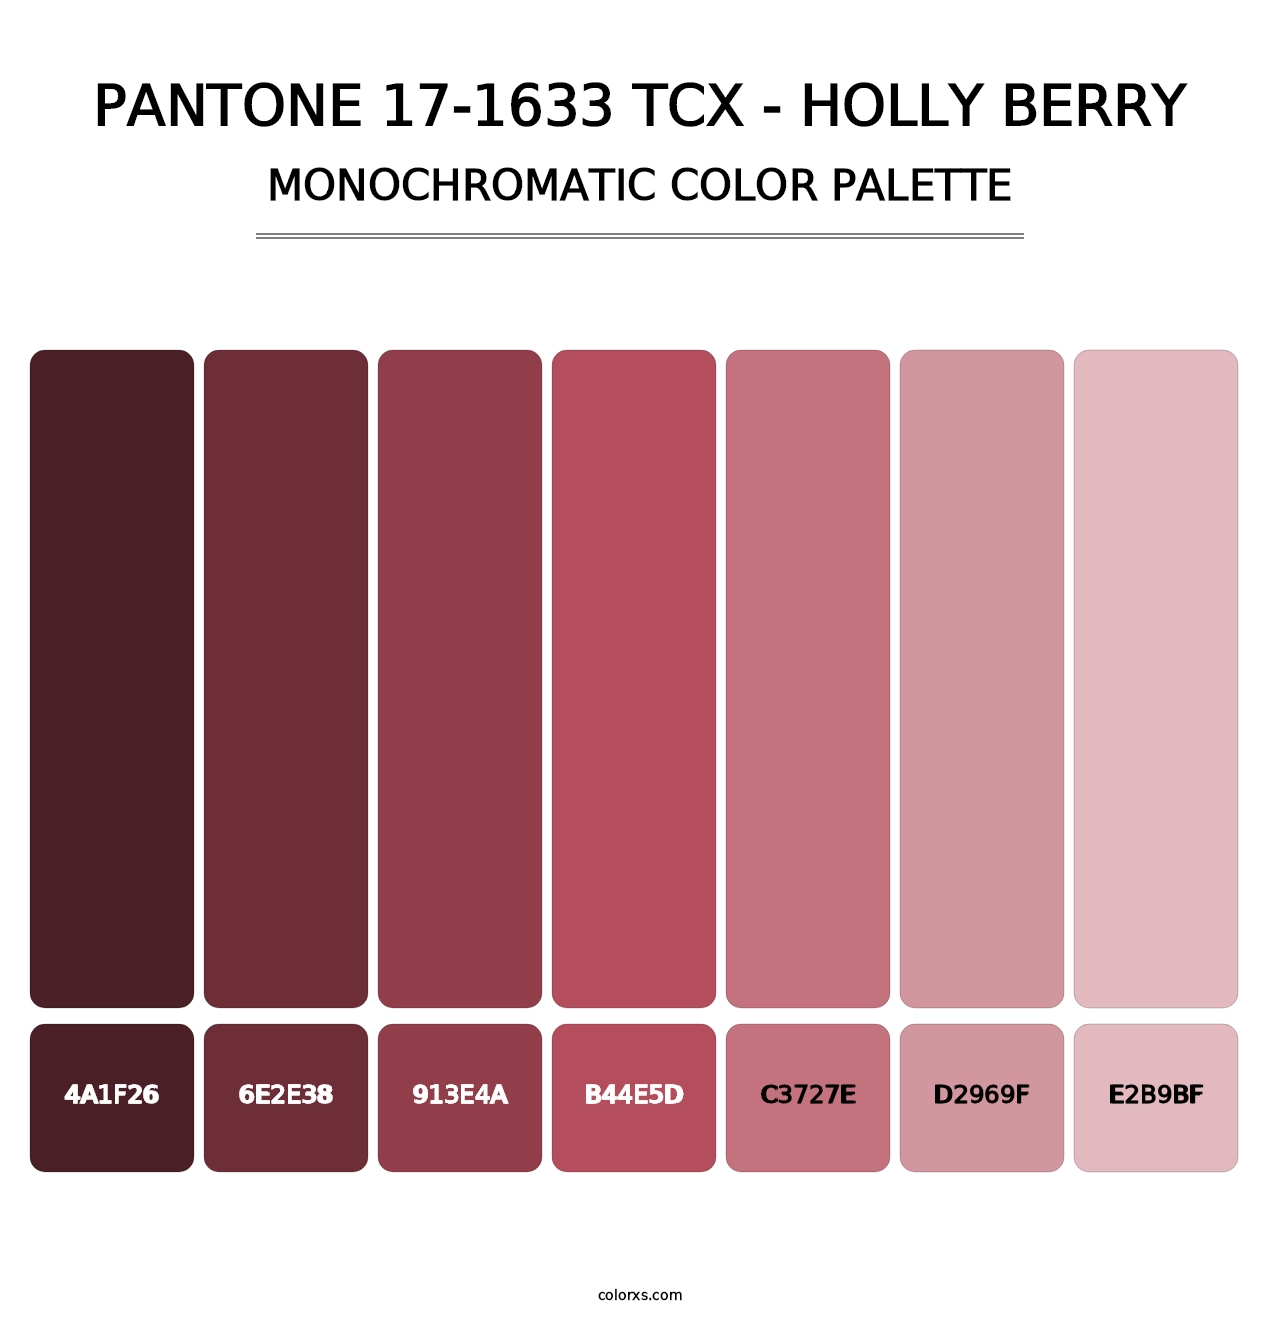 PANTONE 17-1633 TCX - Holly Berry - Monochromatic Color Palette